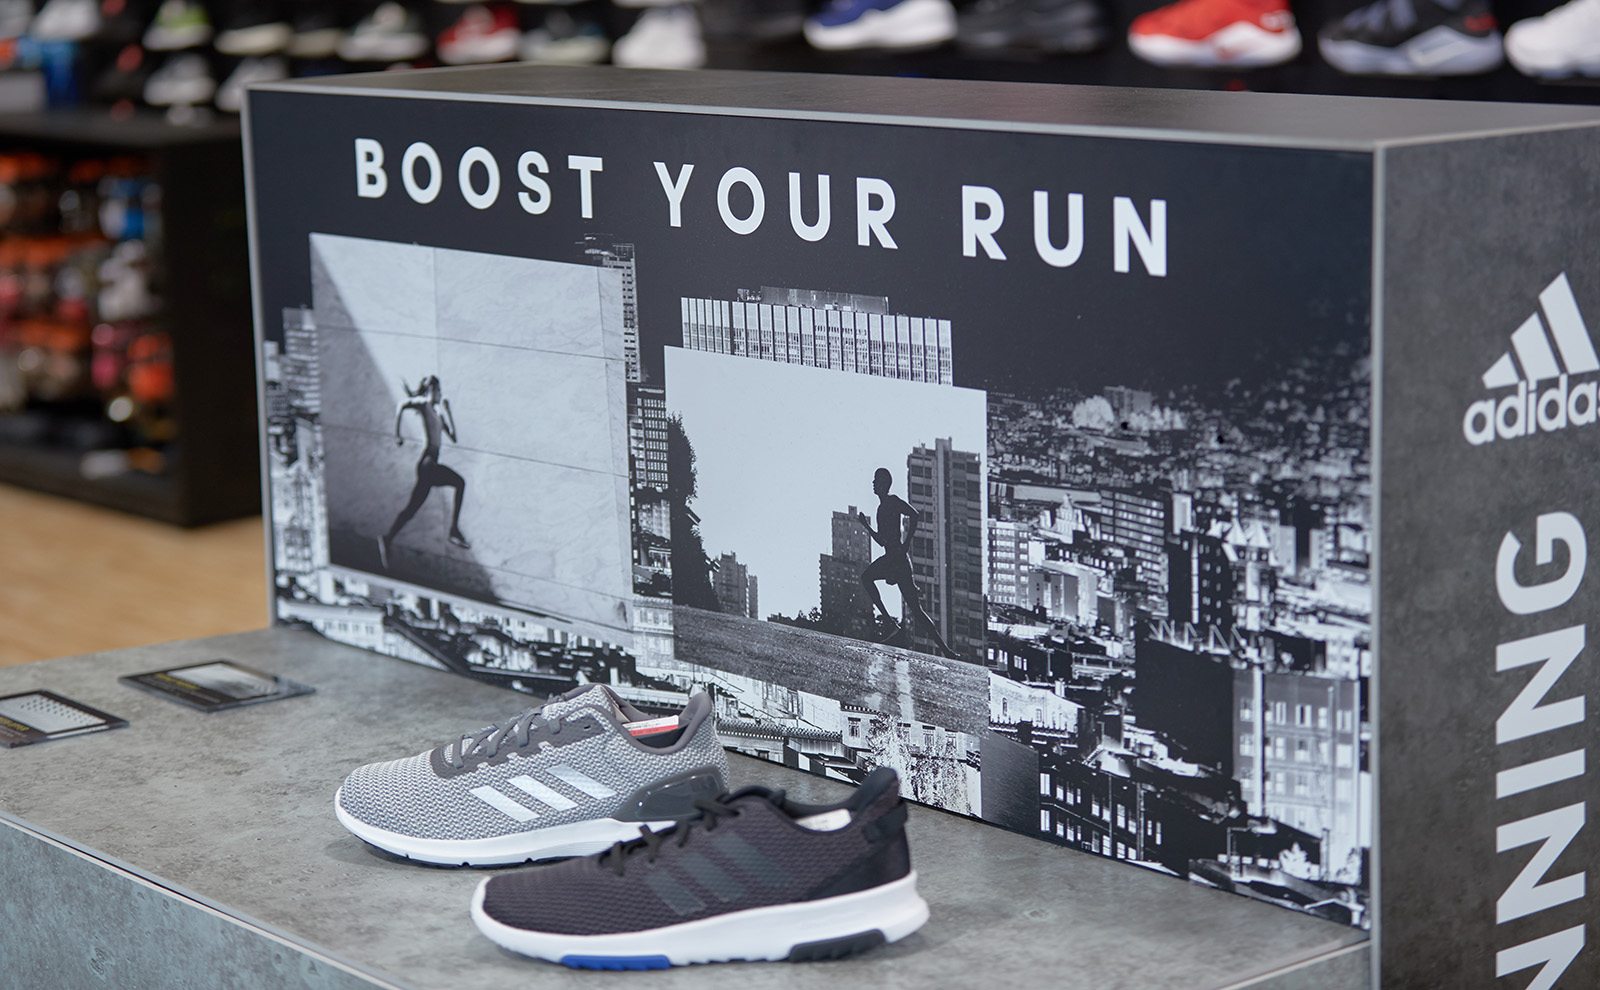 A closer look at an adidas custom shoe display